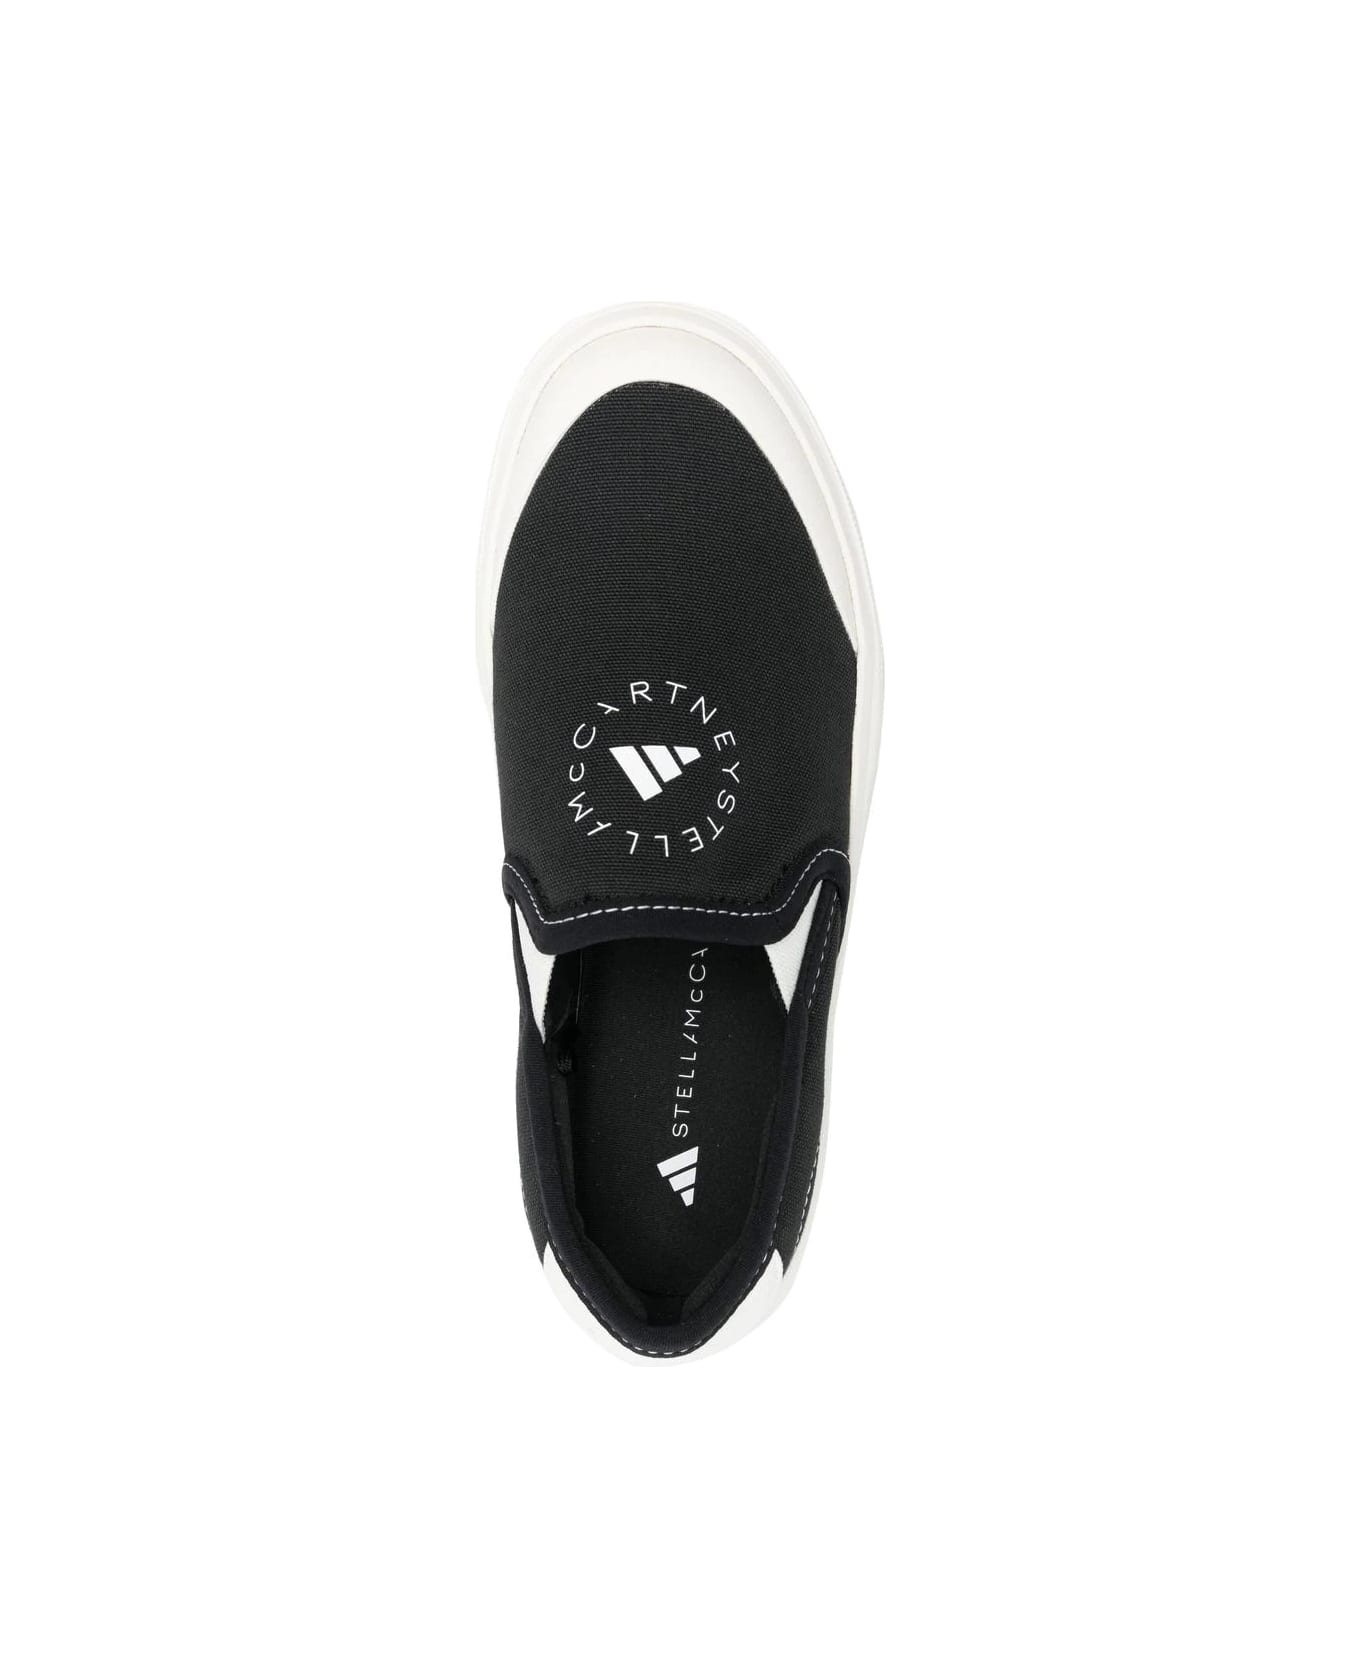 Adidas by Stella McCartney Court Slip-on Sneakers - Cblack Owhite Ftwwht サンダル